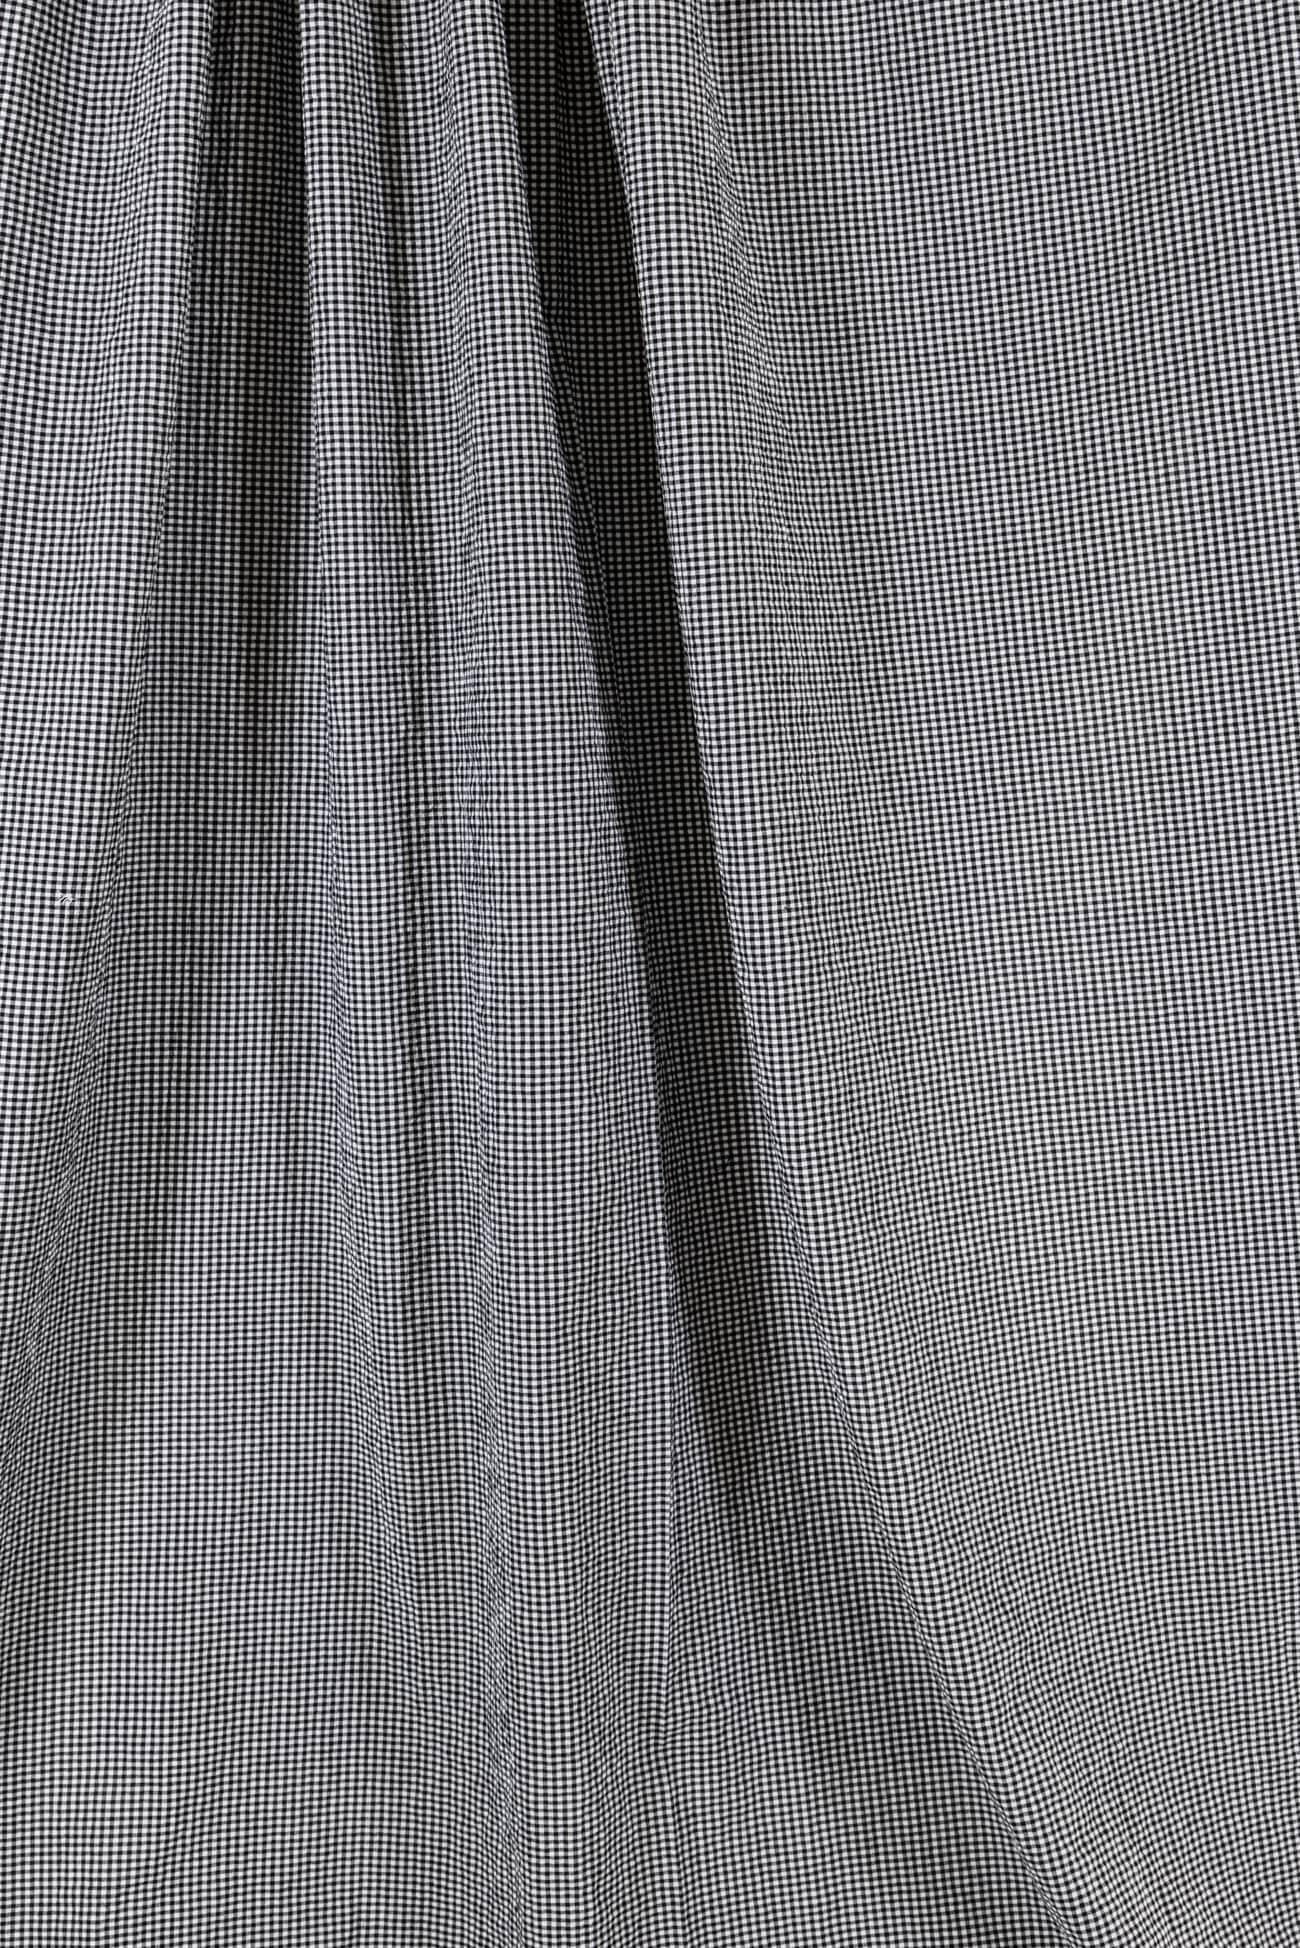 Buy High-Quality Brocade/Jacquard Fabric by the Yard - Kiki